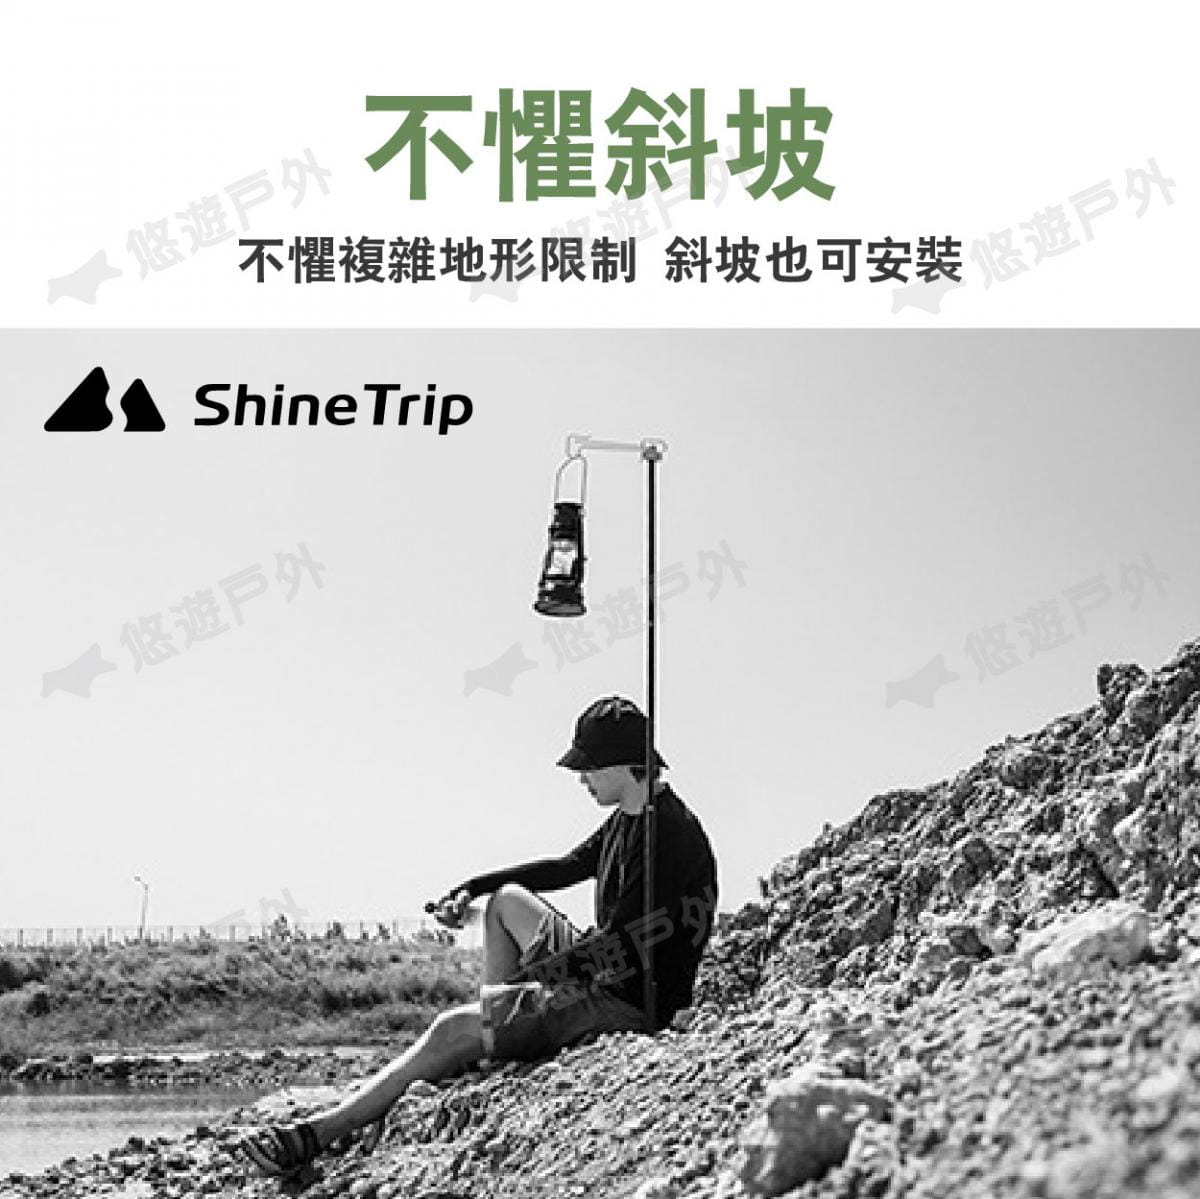 【Shine Trip 山趣】雲翼燈架套裝 16mm燈架 悠遊戶外 3